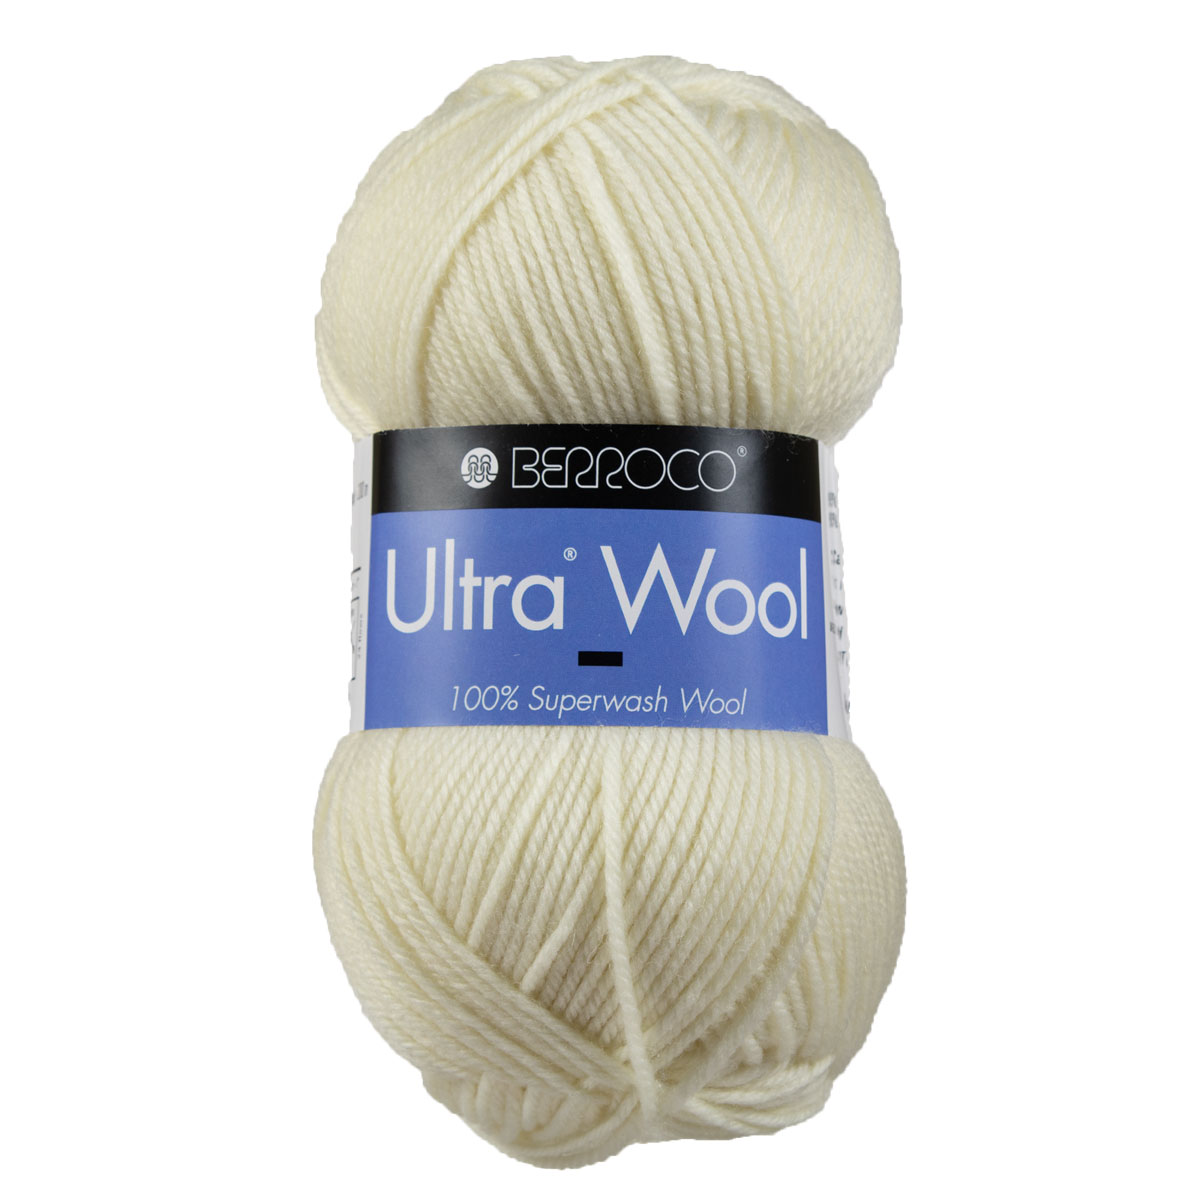 Berroco Ultra Wool Yarn - 3301 Cream at Jimmy Beans Wool